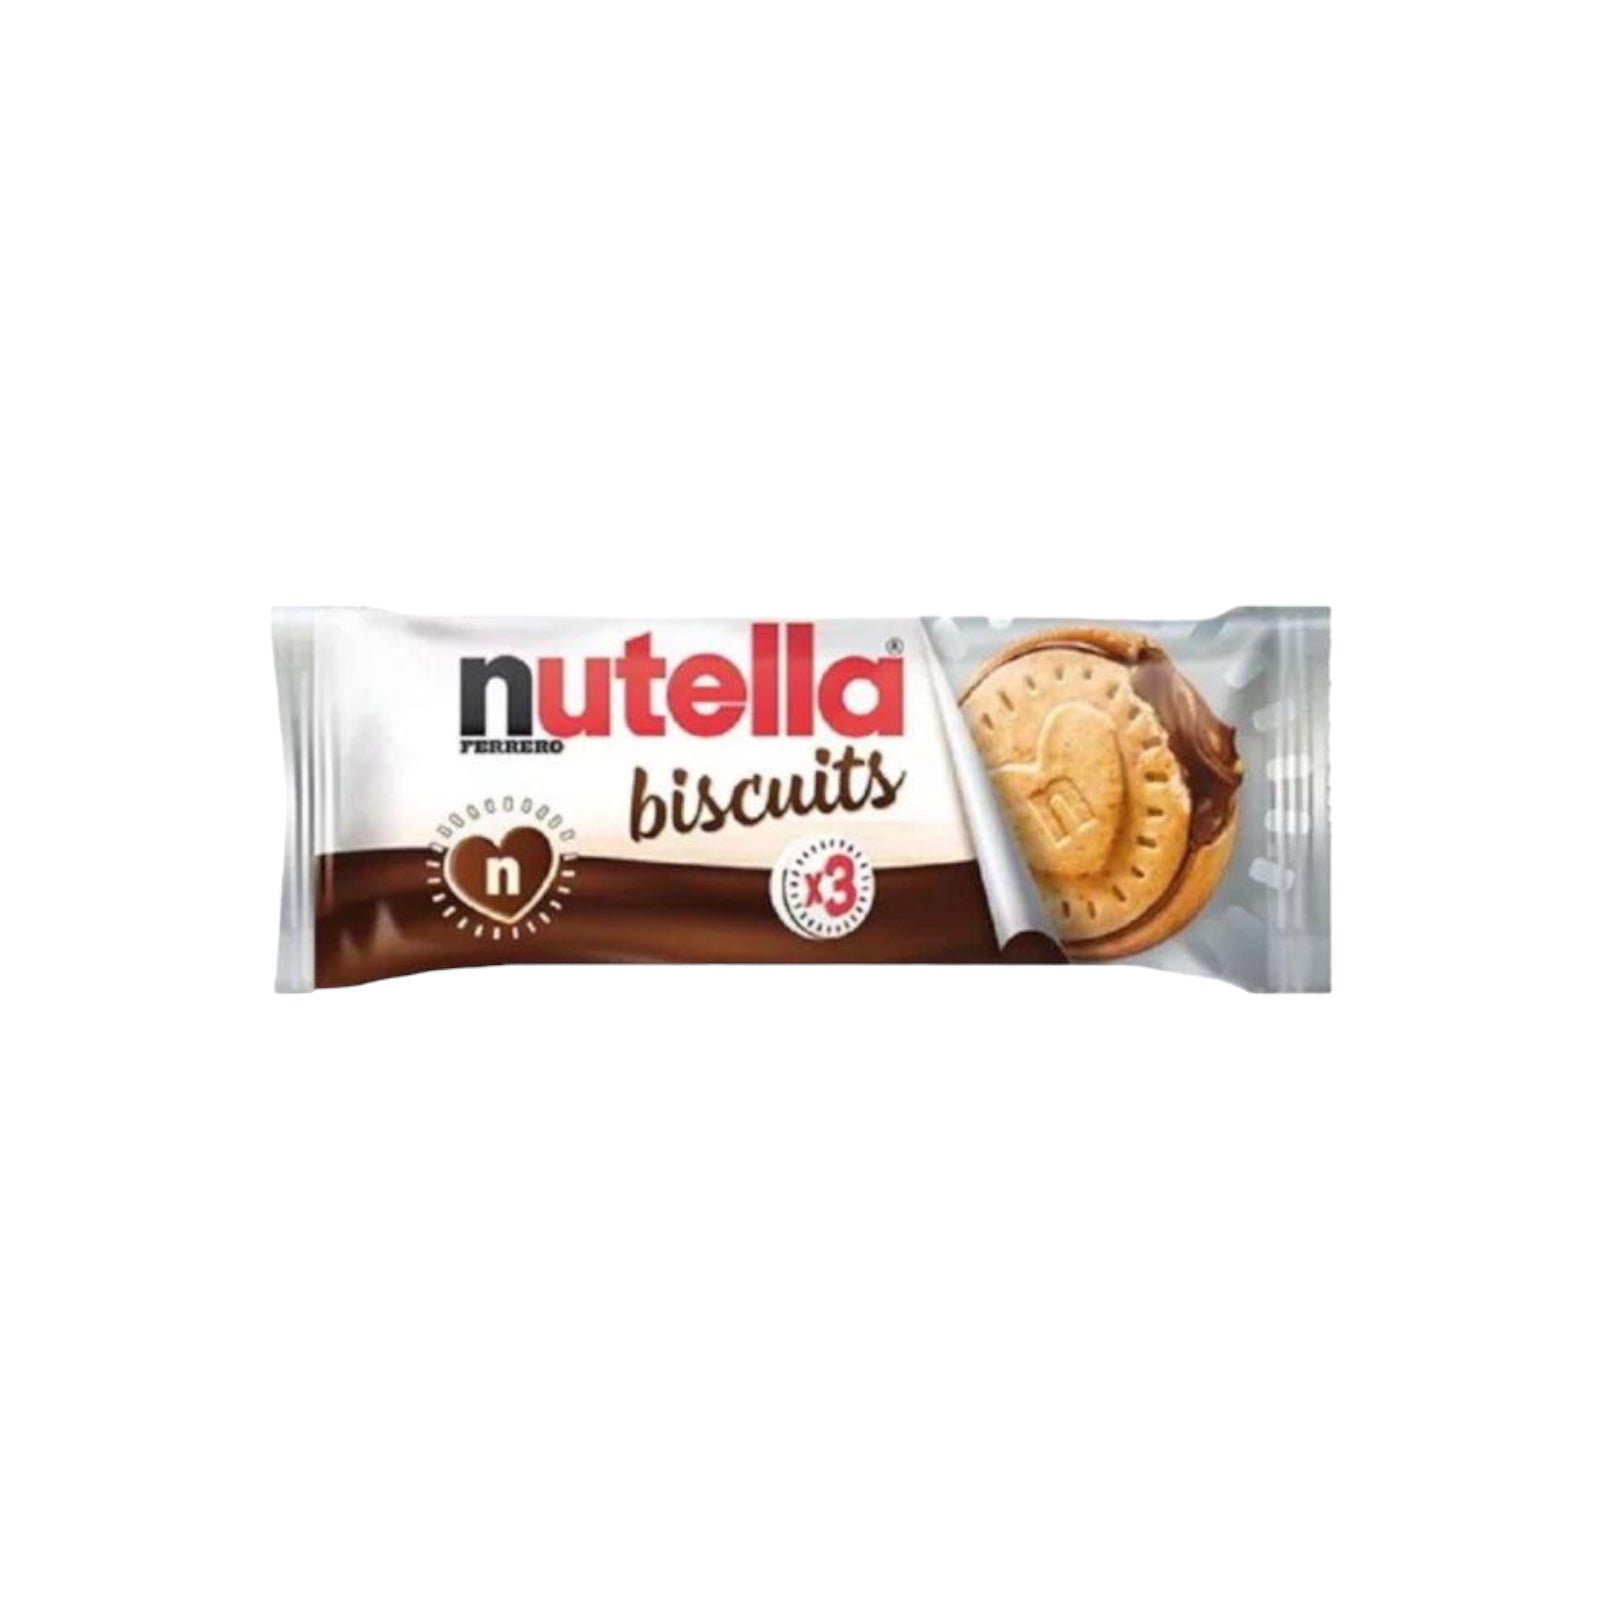 Nutella Biscuits Ferrero 41.4g